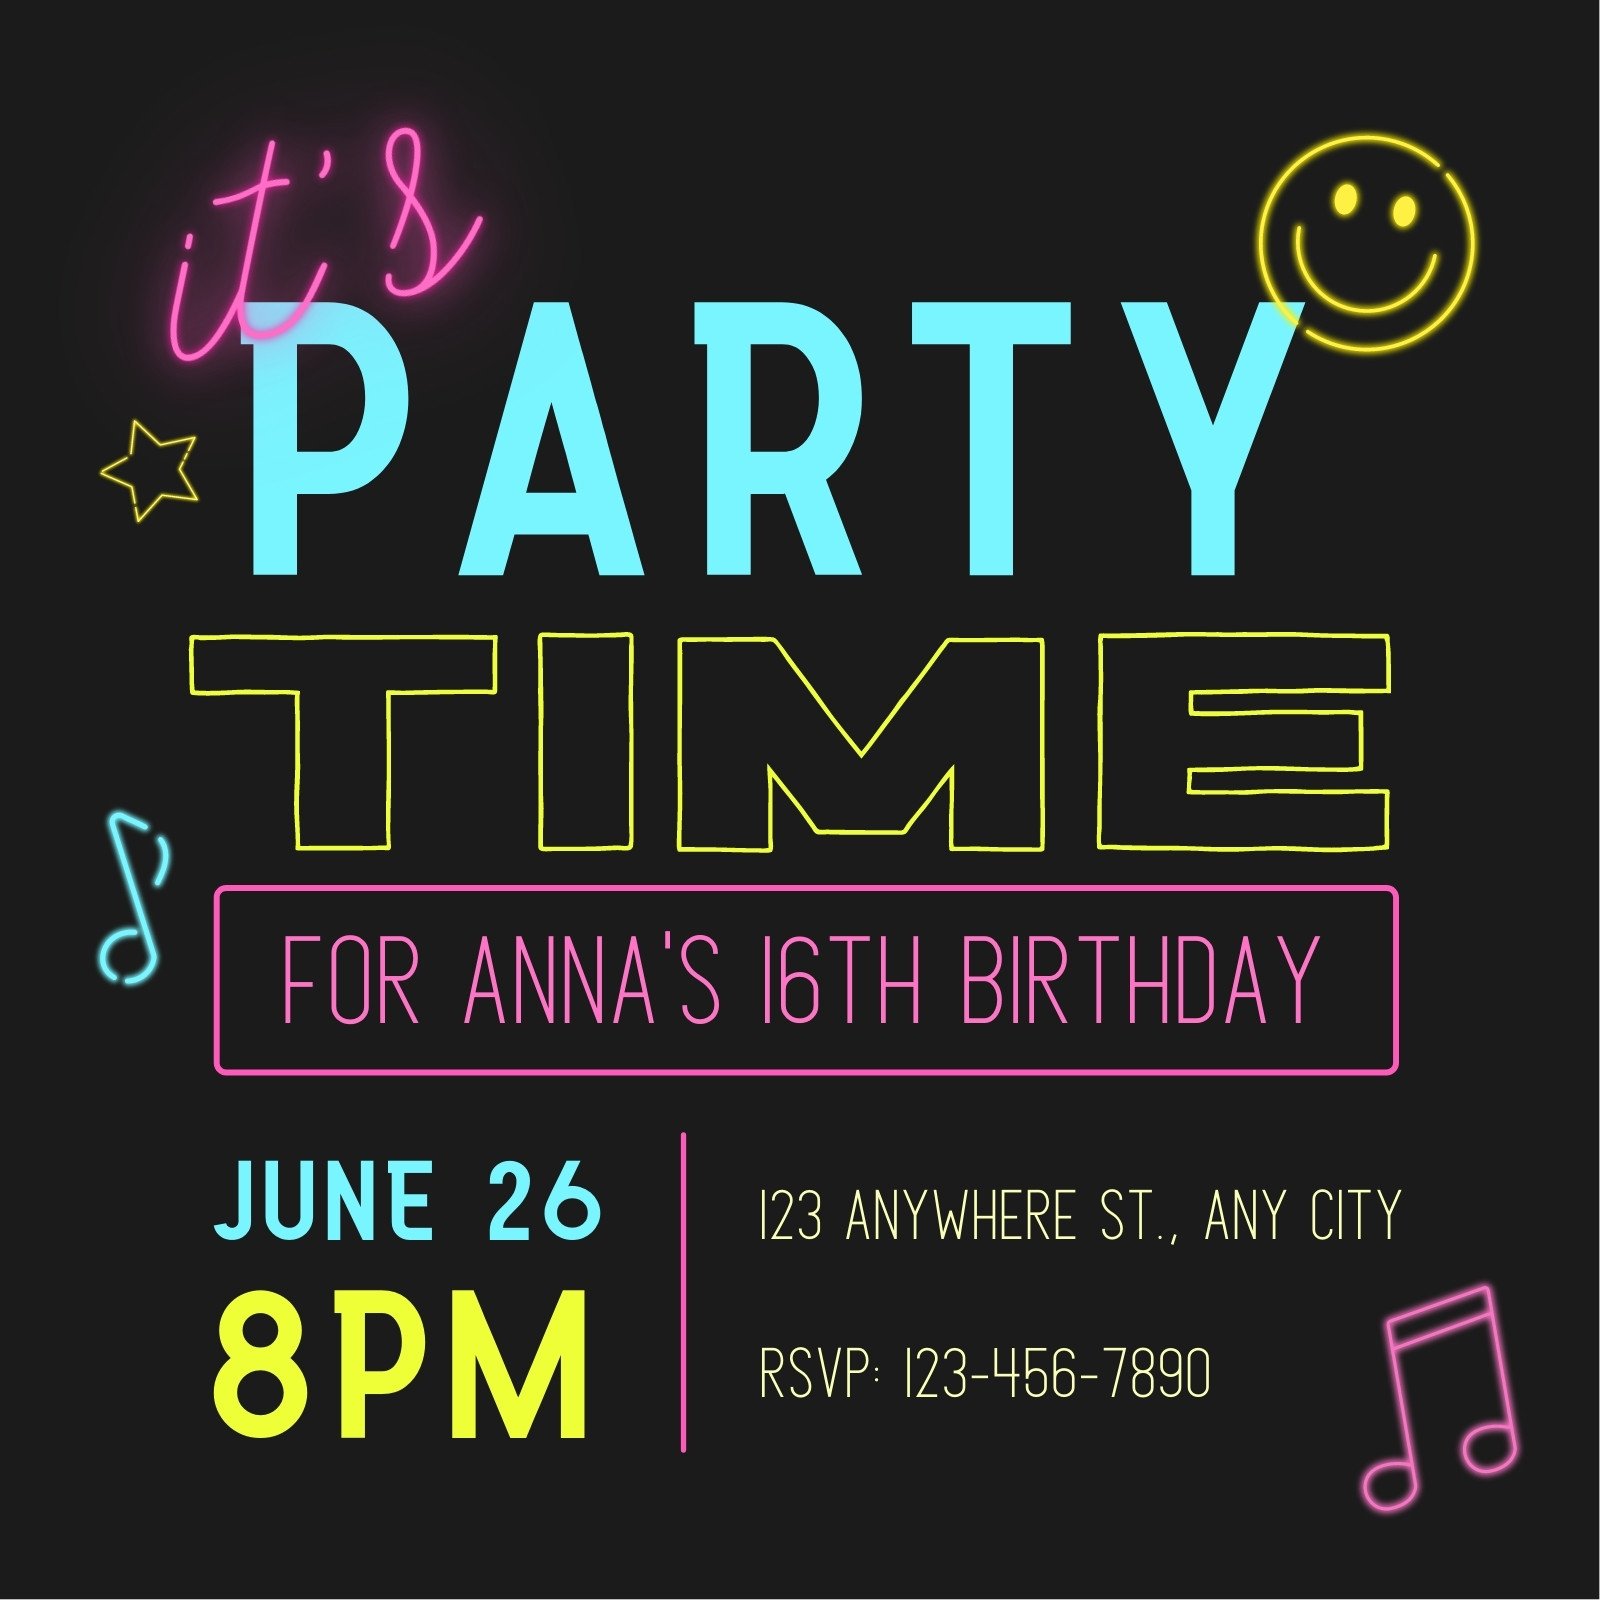 Free party invitations